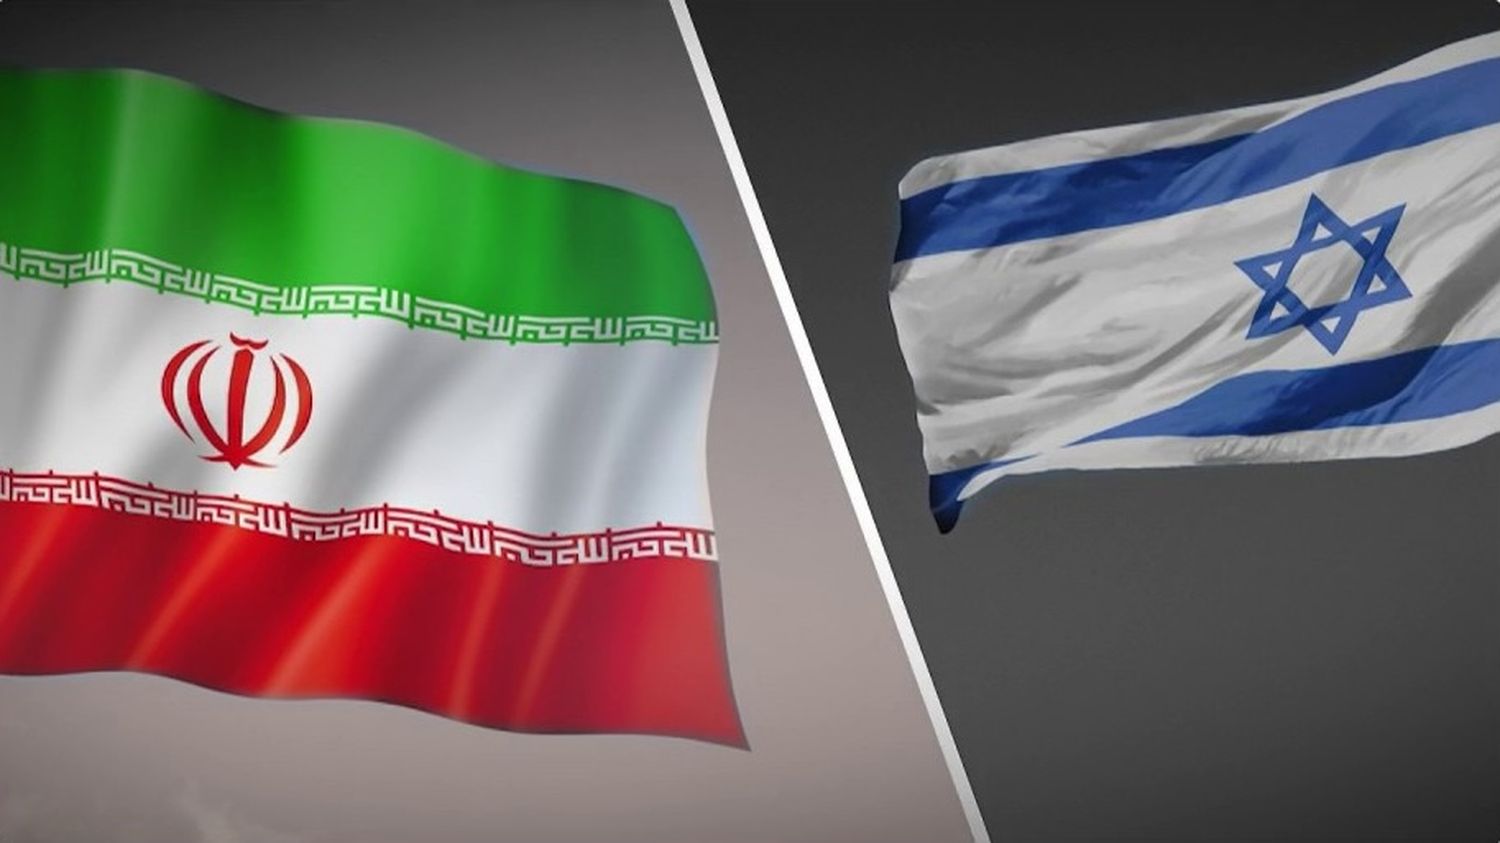 Iran-Israël : Une situation très pernicieuse